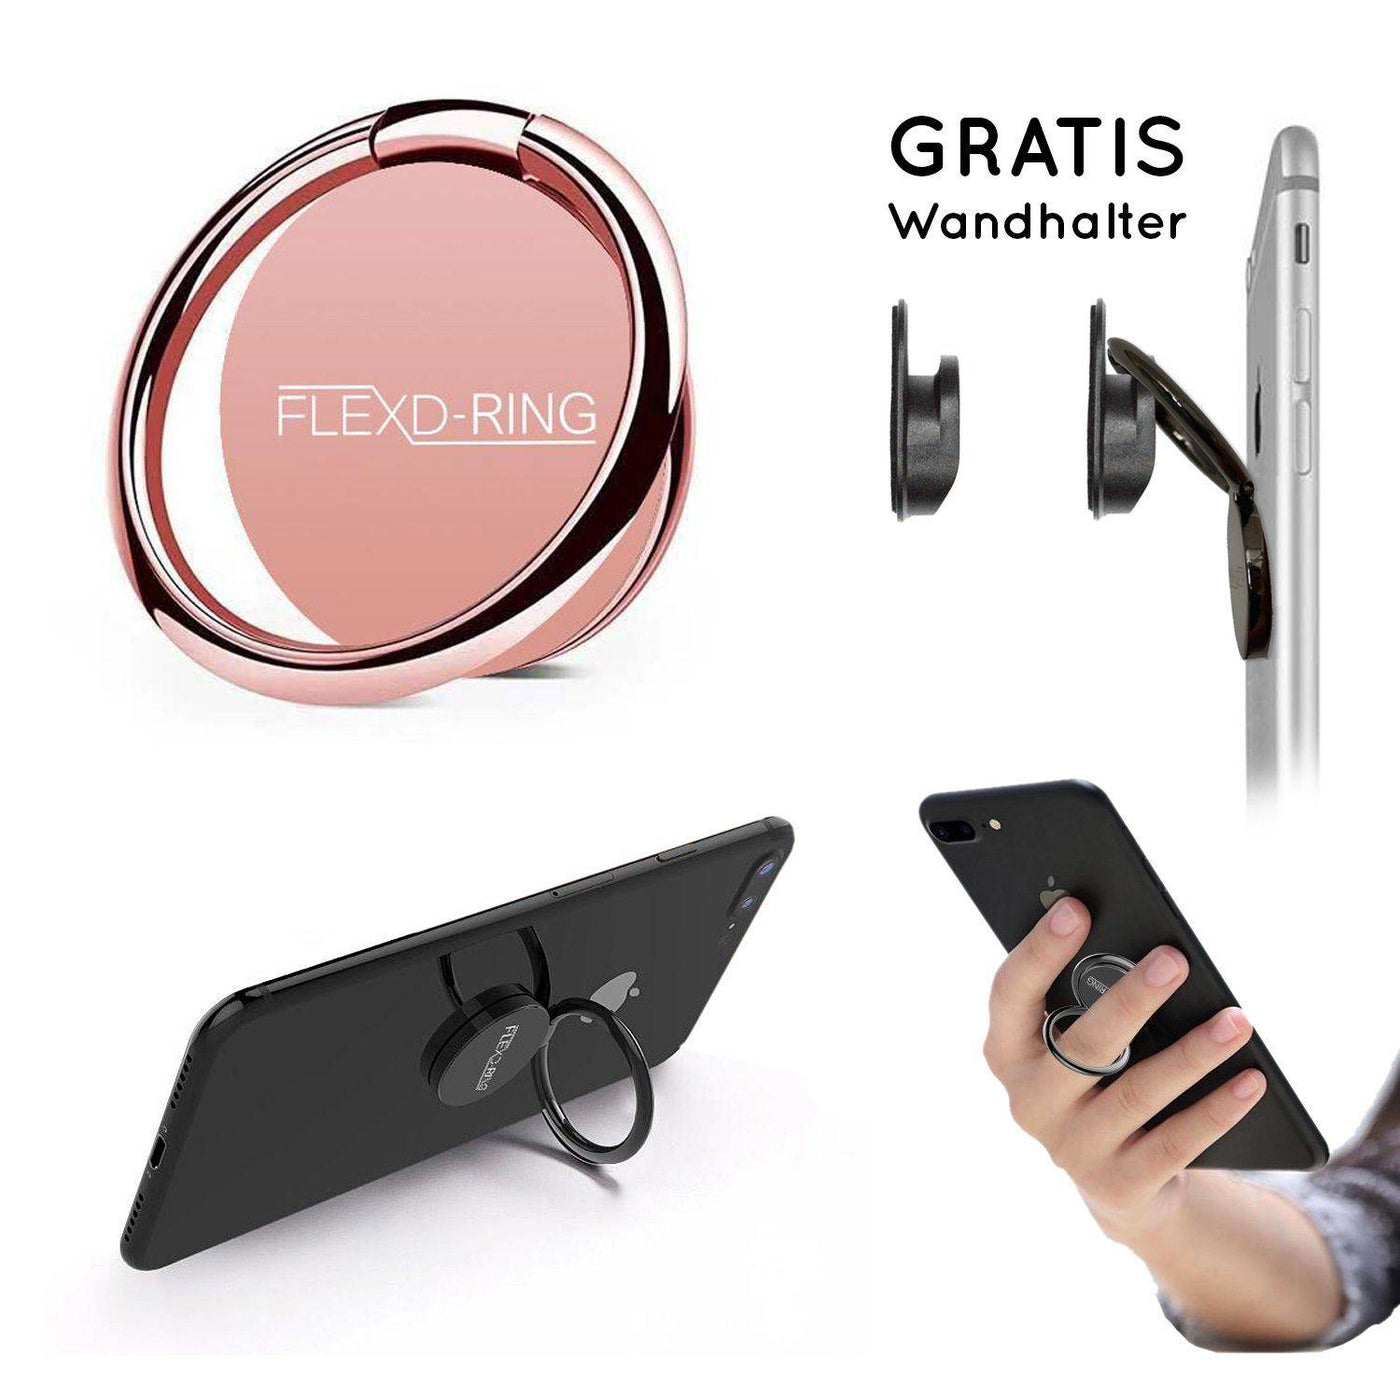 FLEXD-RING Hochwertiger Handy Fingerhalter inkl. 2x Wandhalterung Smartphone Flexd-x Rosé 